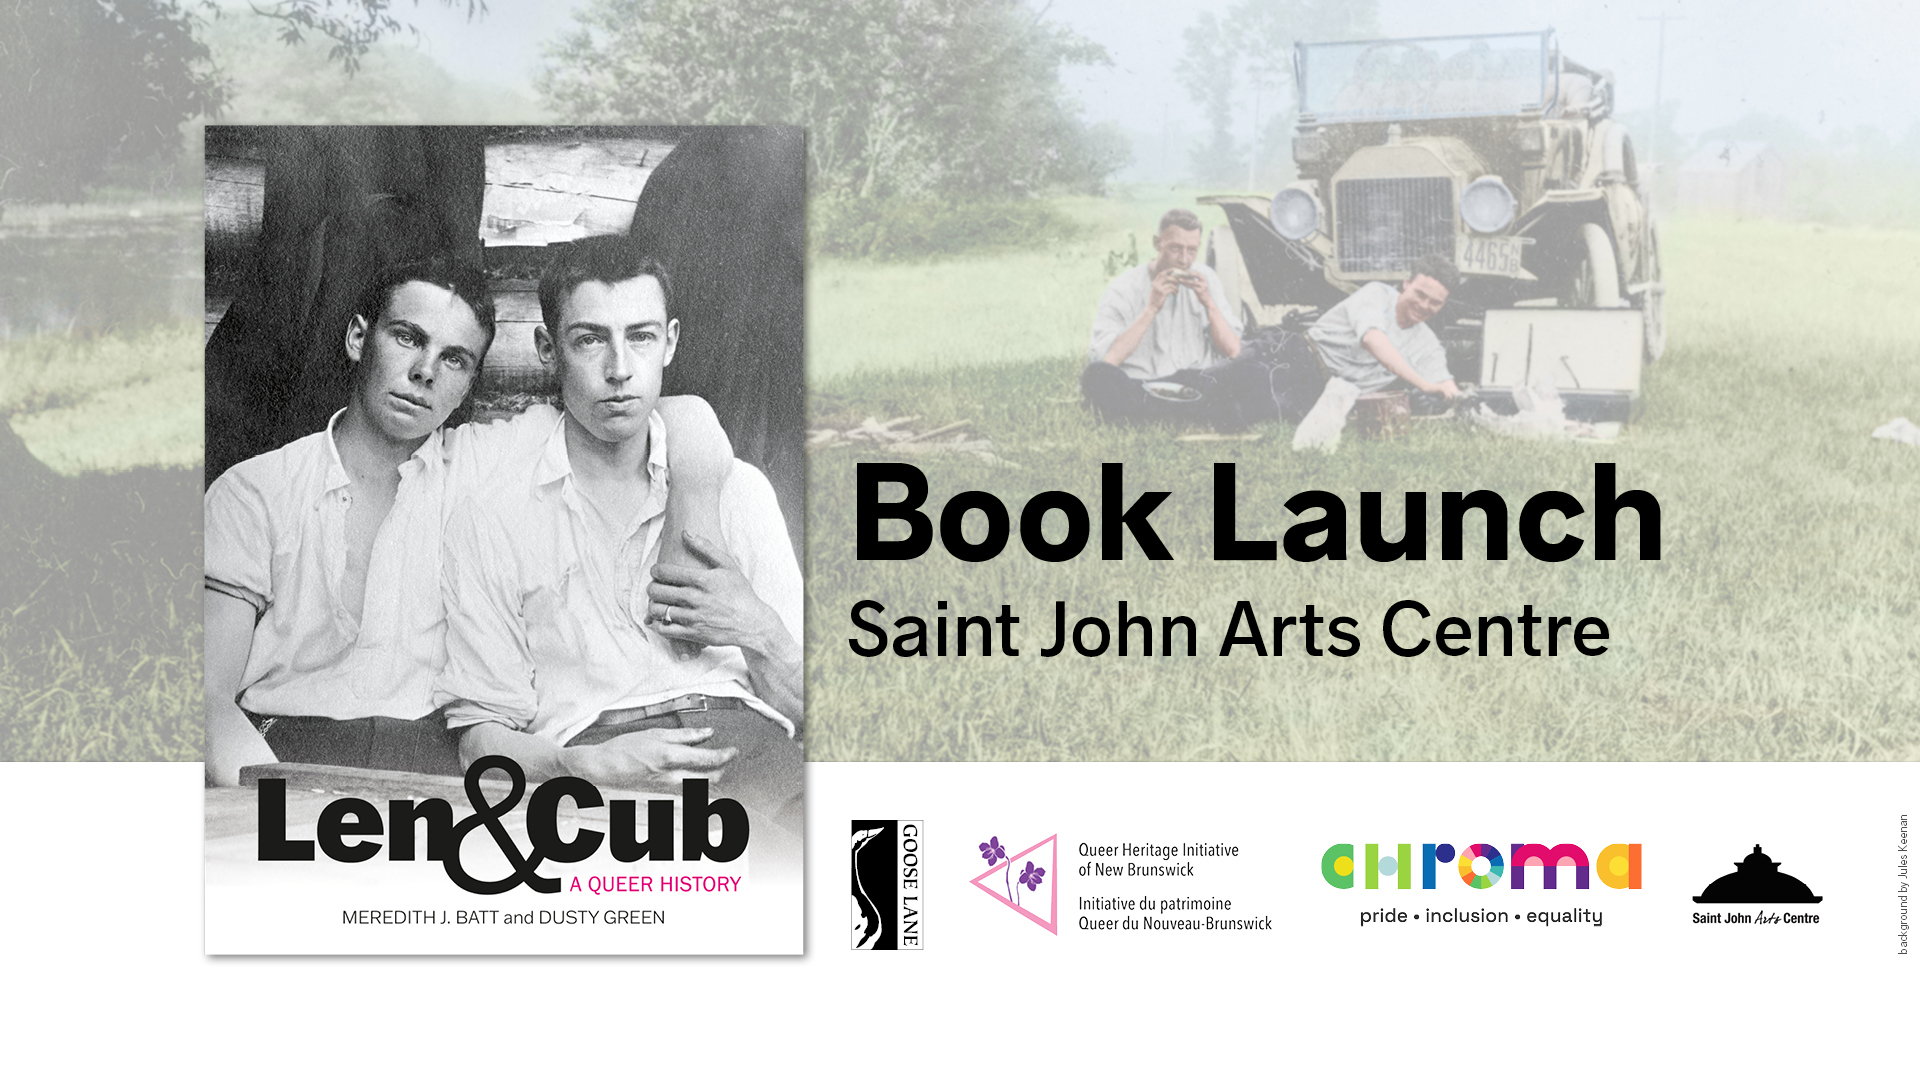 Len and Cub Book Launch at the Saint John Arts Centre